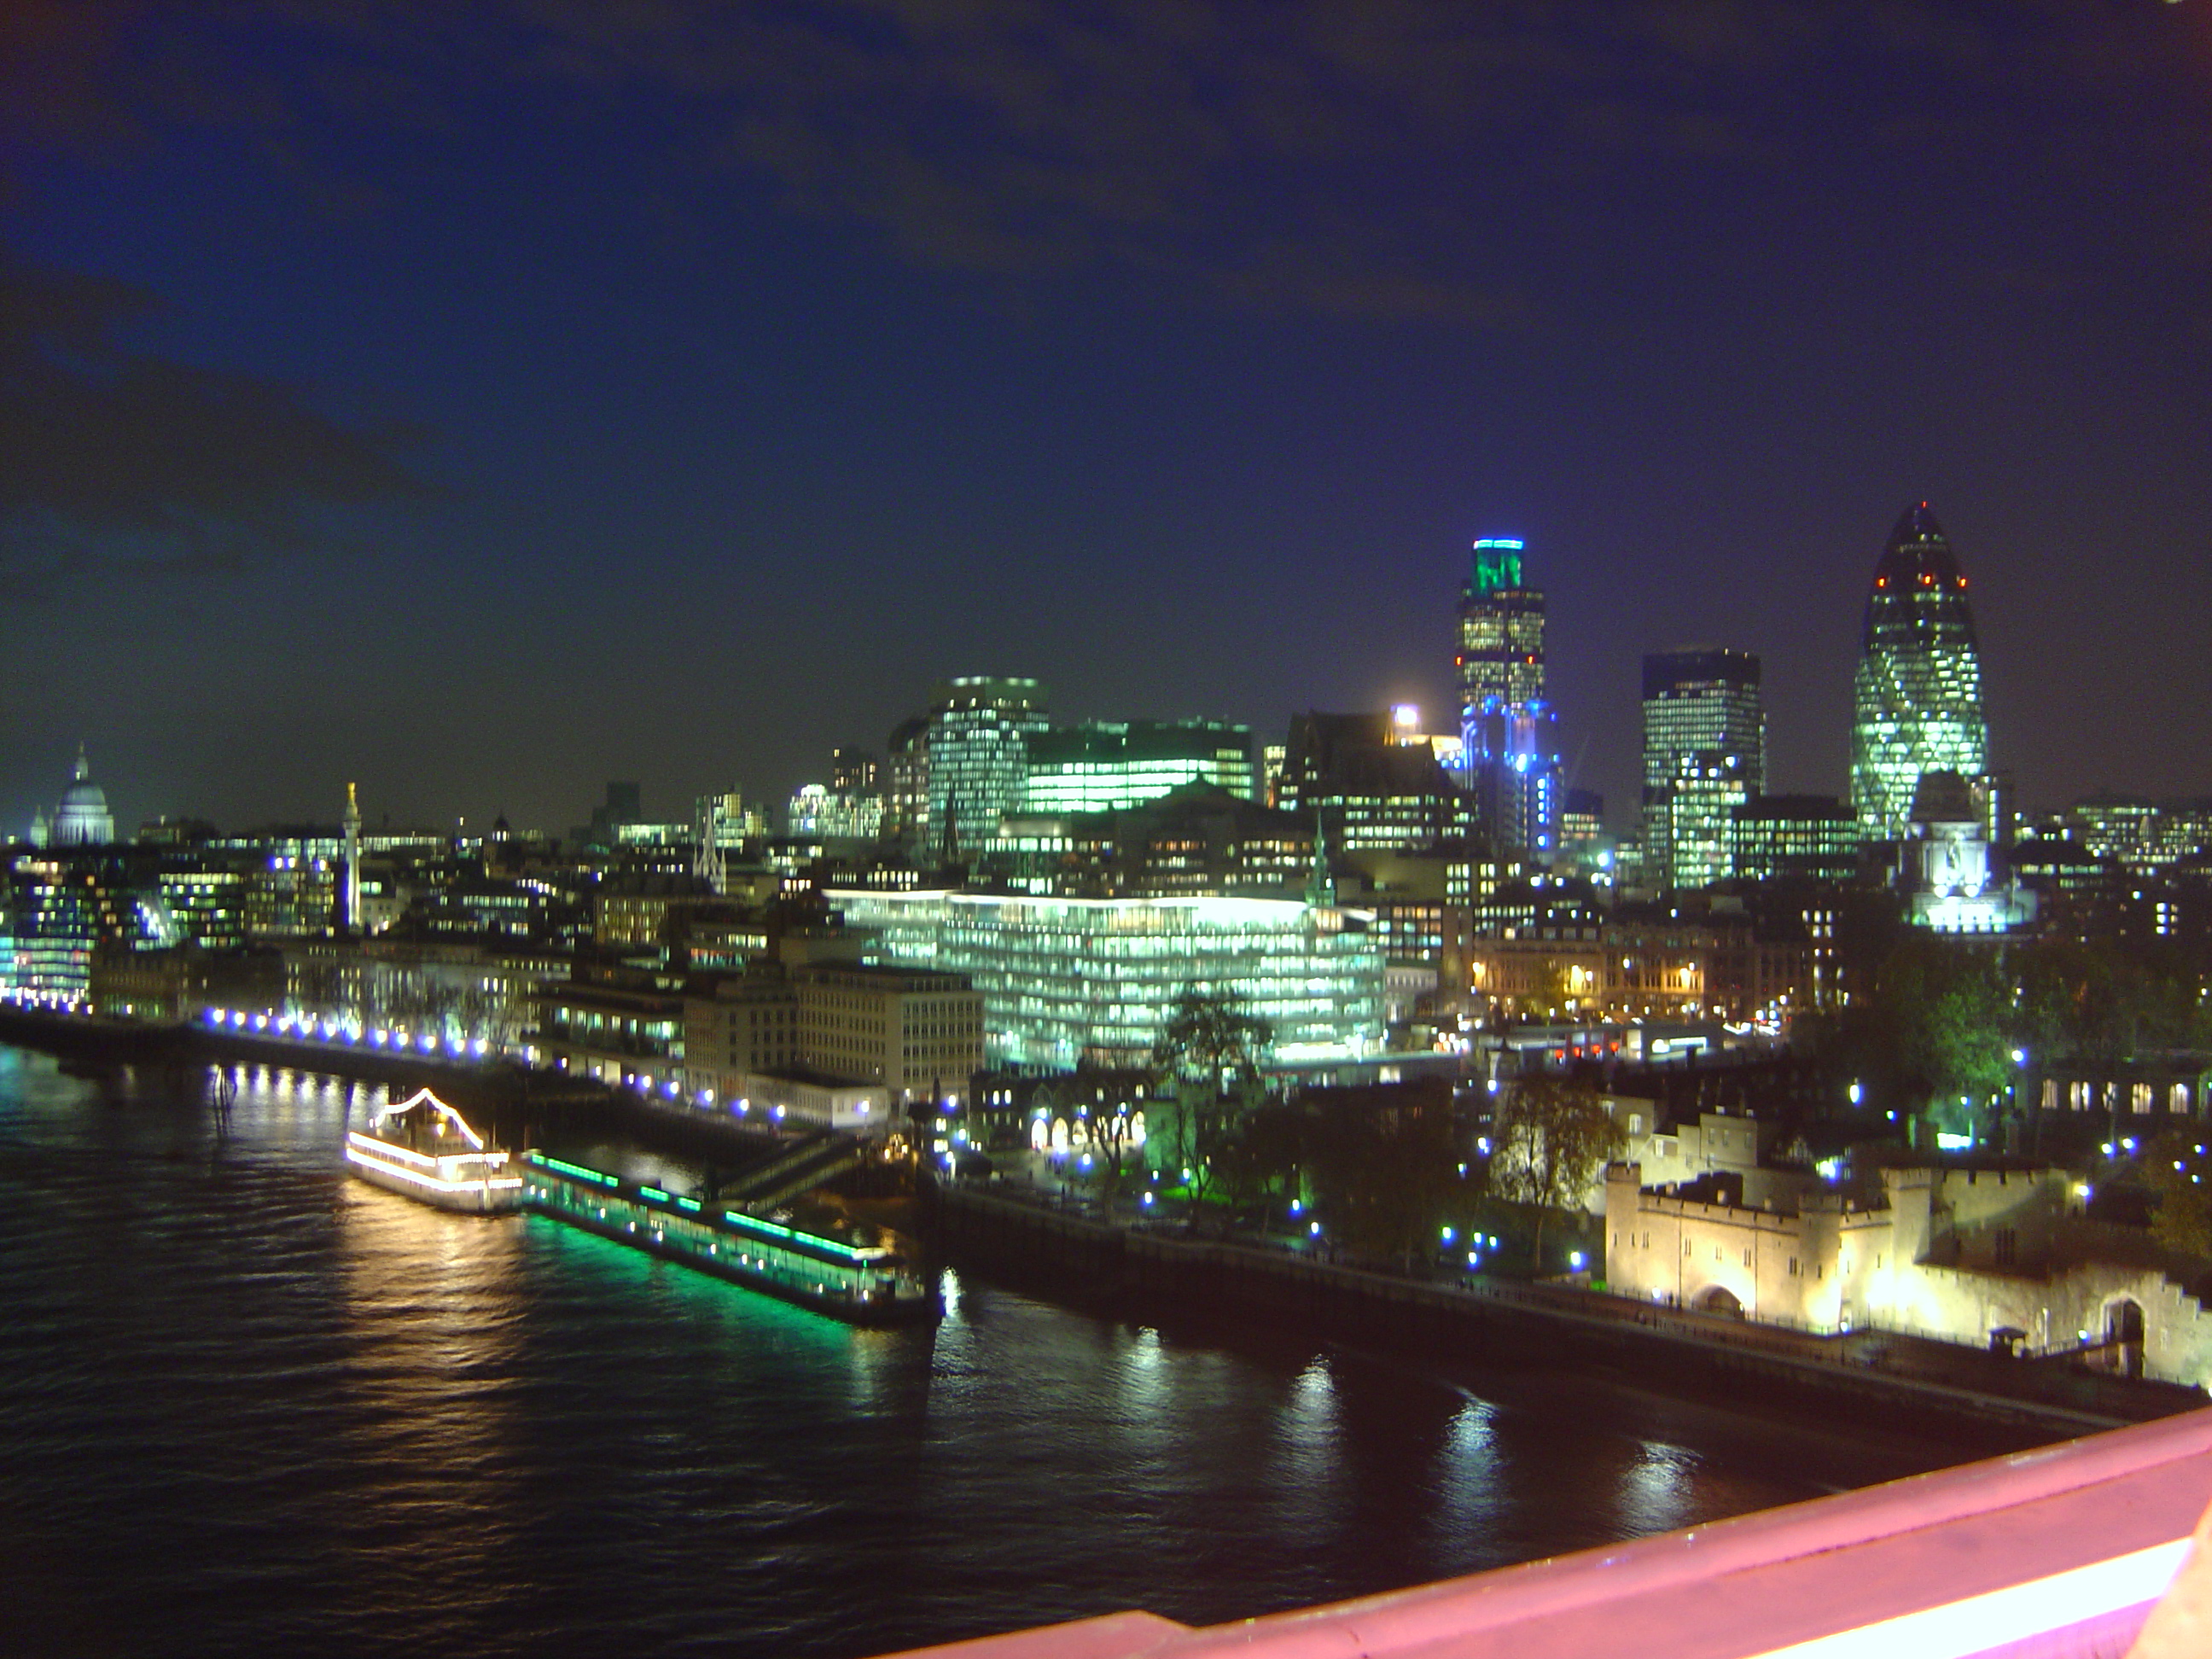 City_of_London_at_night